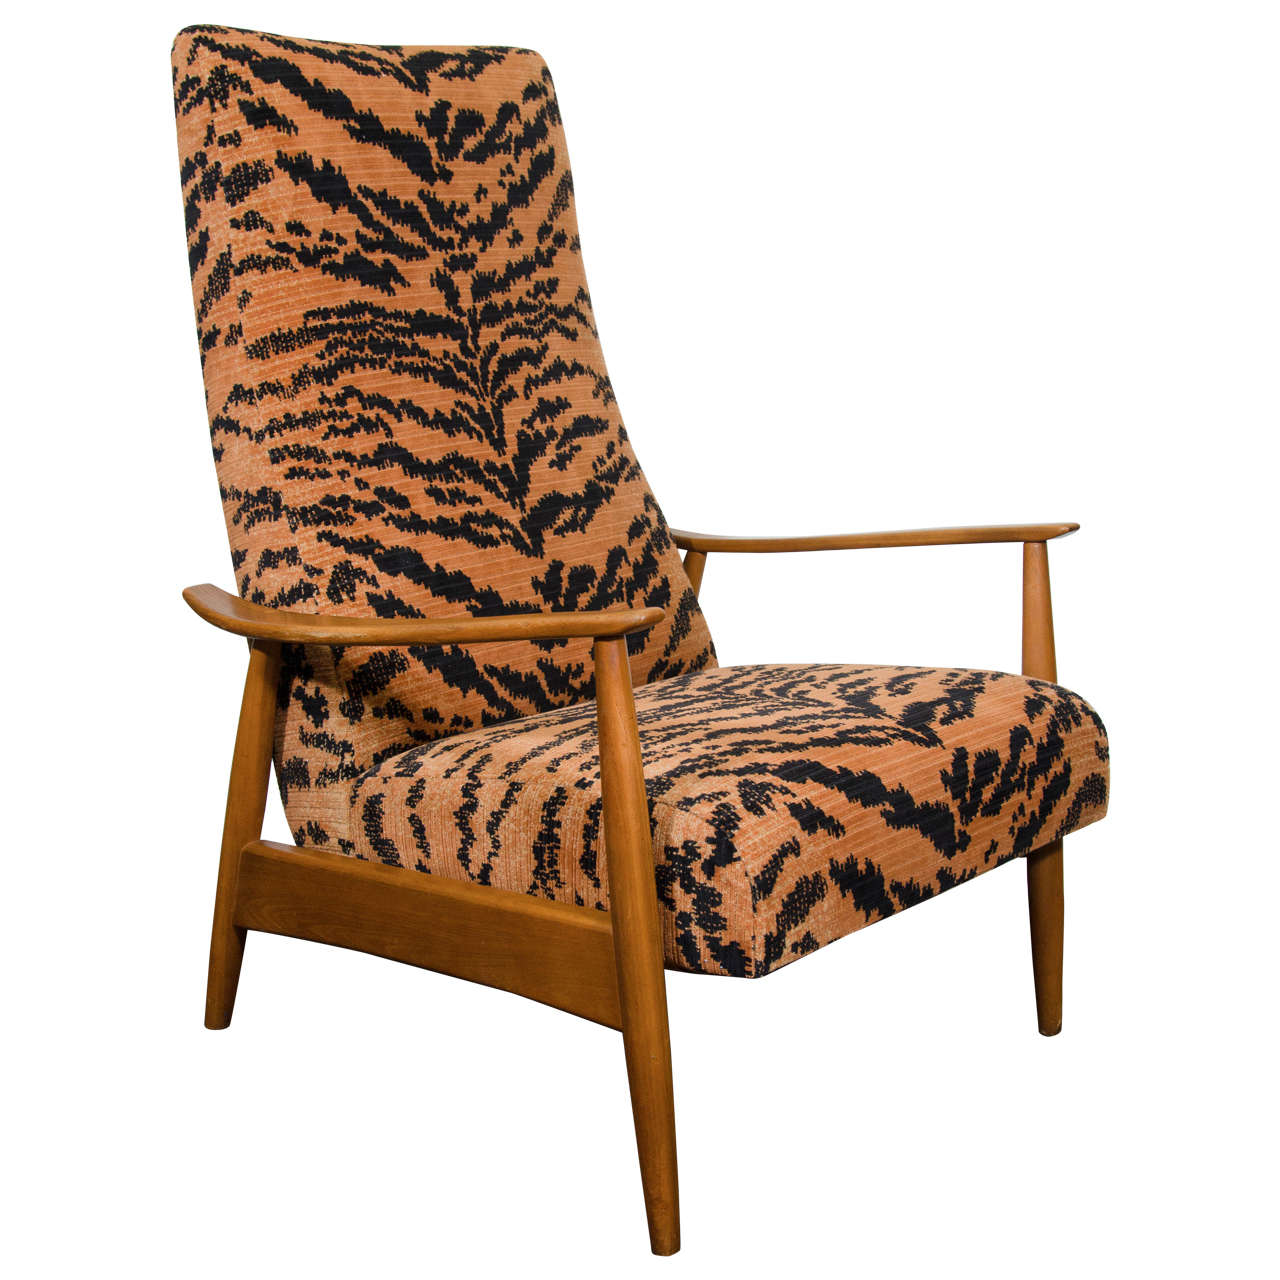 Midcentury Teak Recliner with Tiger Velvet Upholstery by Milo Baughman